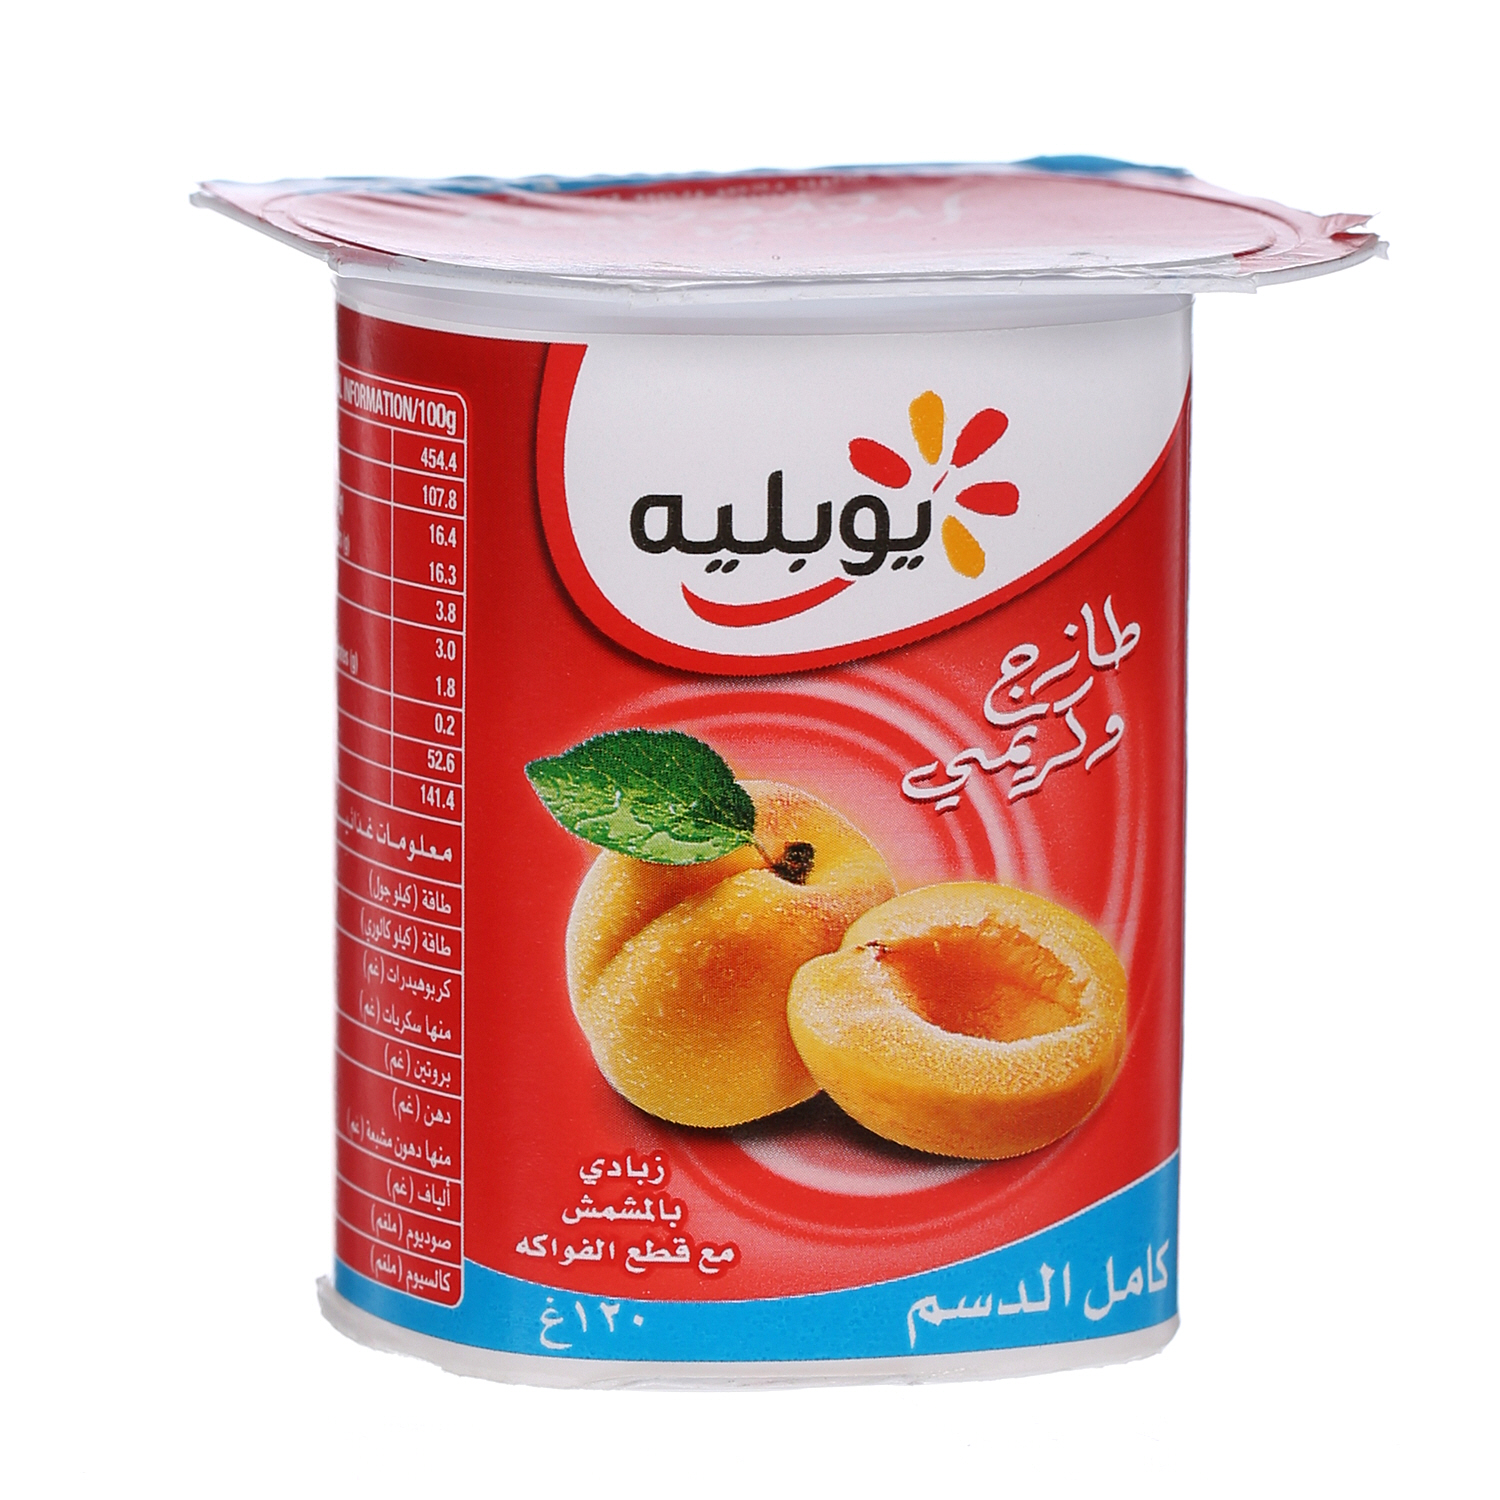 Yoplait Flavoured Yoghurt Apricot Full Fat 120 g